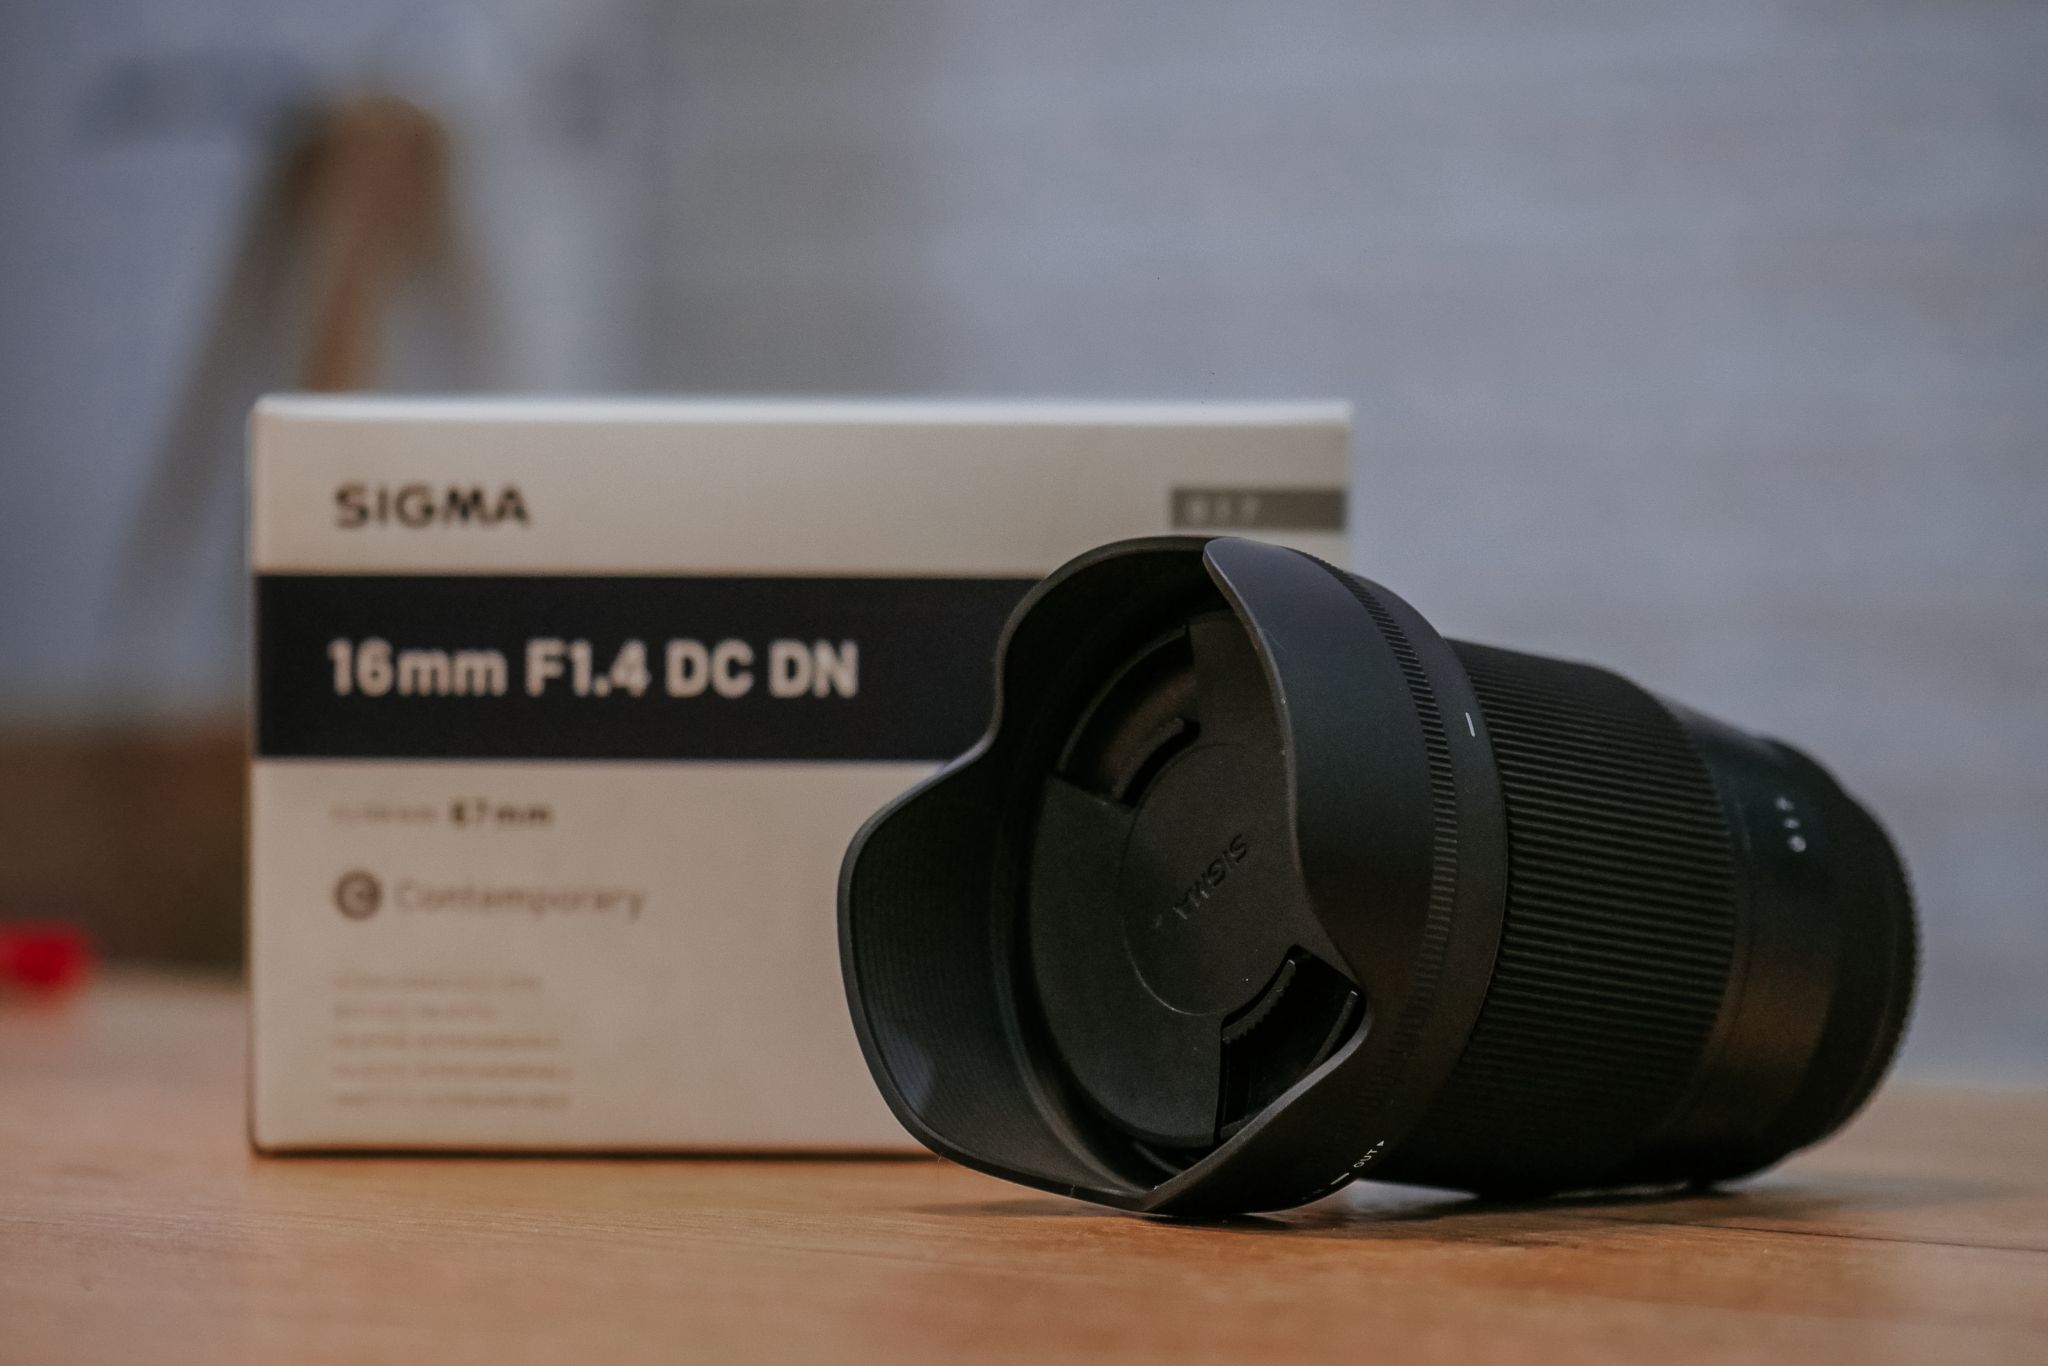 Sigma 16mm dn. Sigma 16mm f1.4 Sony e. Sigma 16mm f1.4 Sony. Sigma 16mm f/1.4 DC DN. Sigma 16mm f1.4 DC DN Contemporary Sony e.